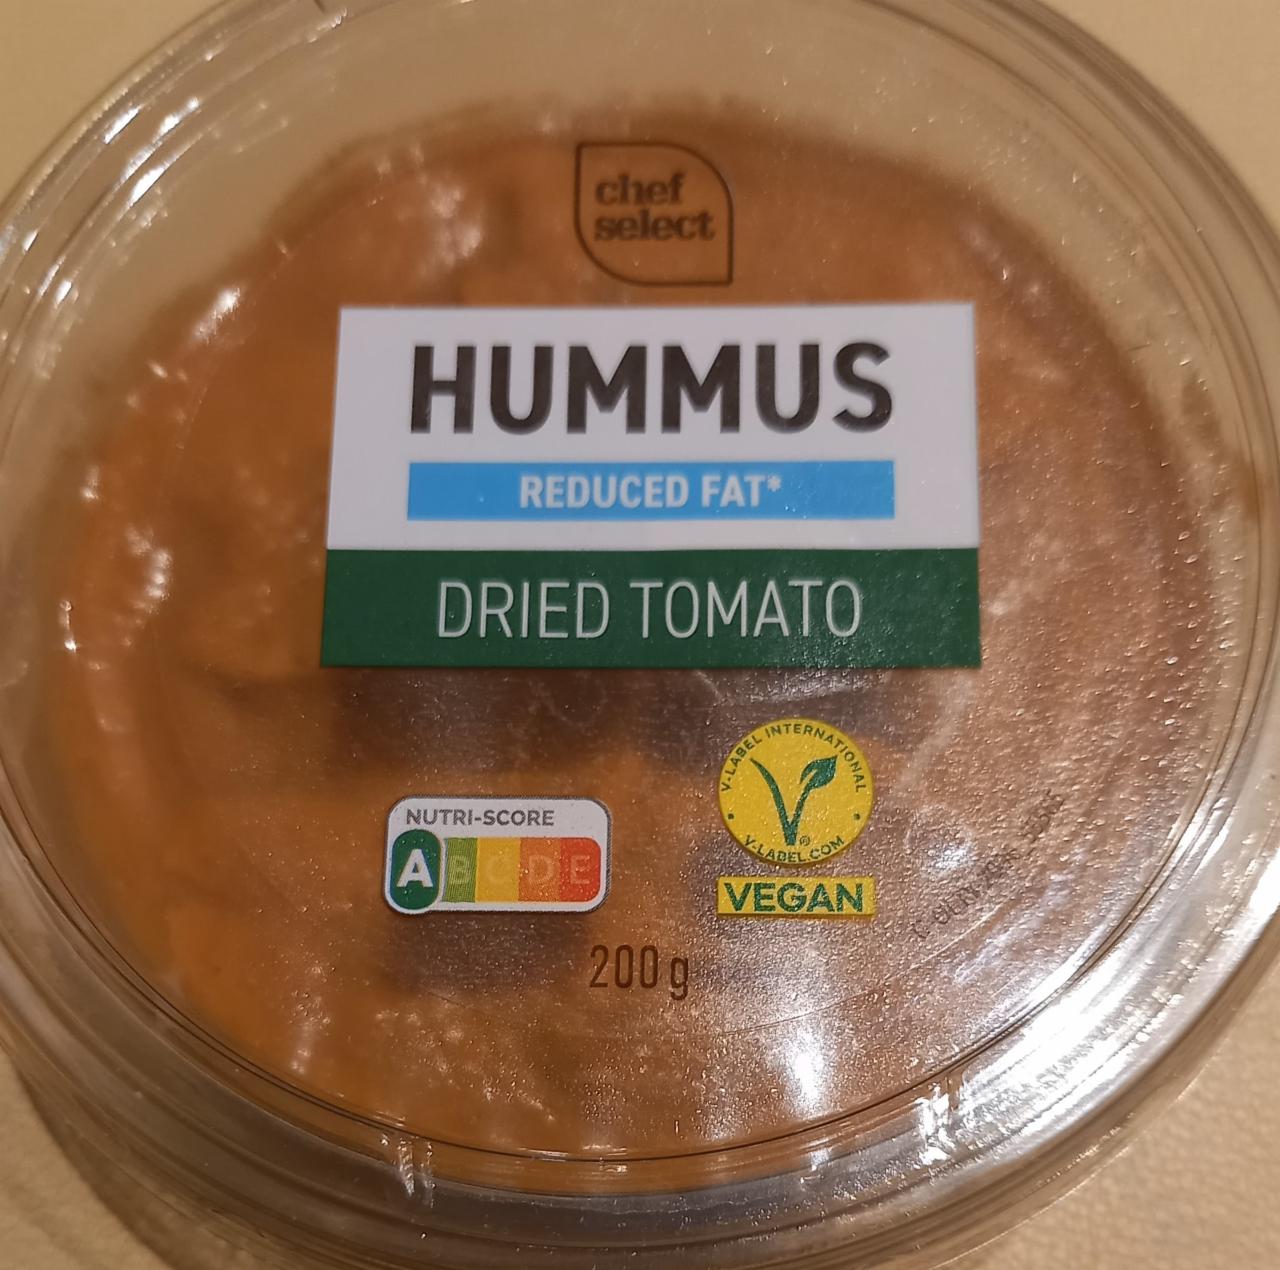 Fotografie - Hummus reduced fat Dried Tomato Chef Select